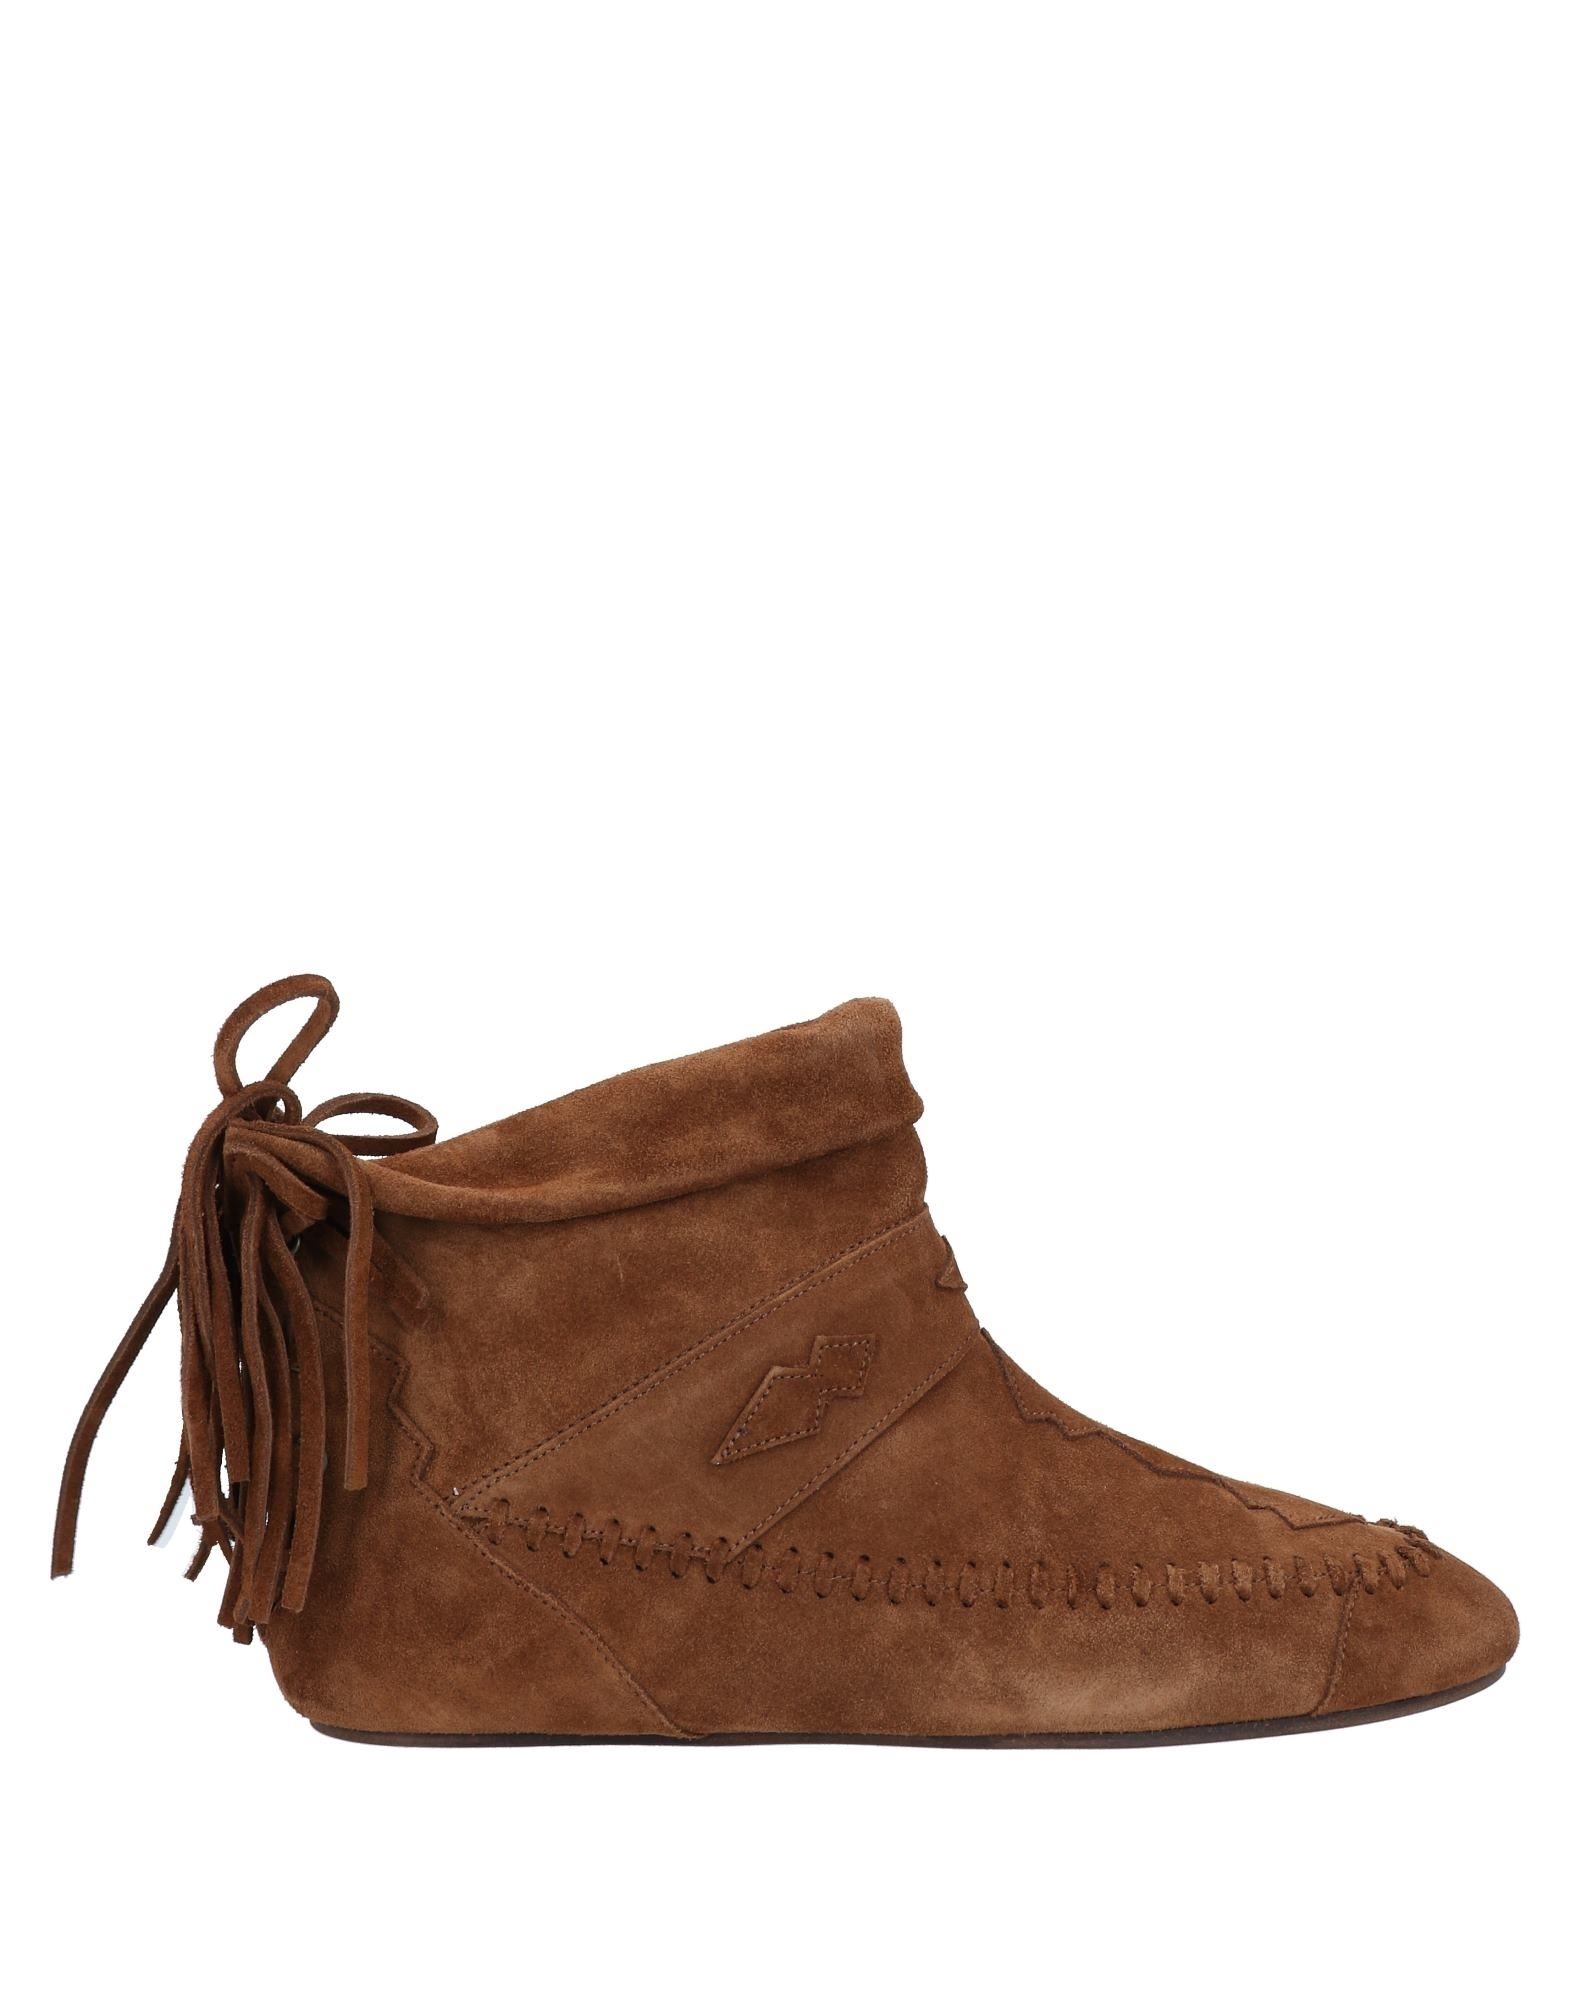 Saint Laurent Ankle Boots In Camel